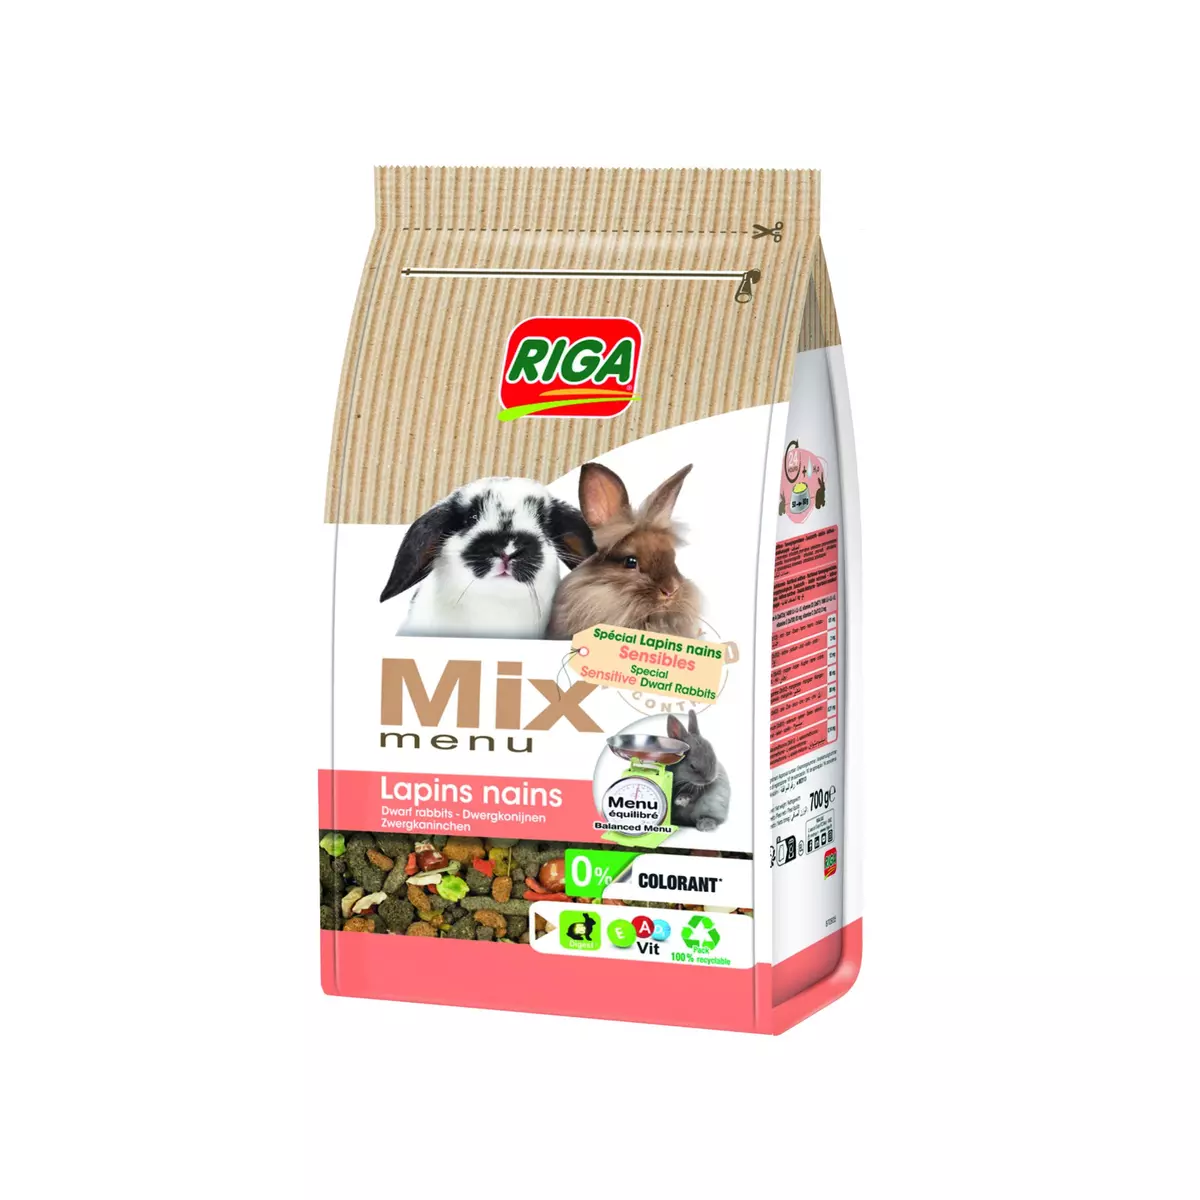 RIGA Mix menu pour lapins nains sensibles 700g